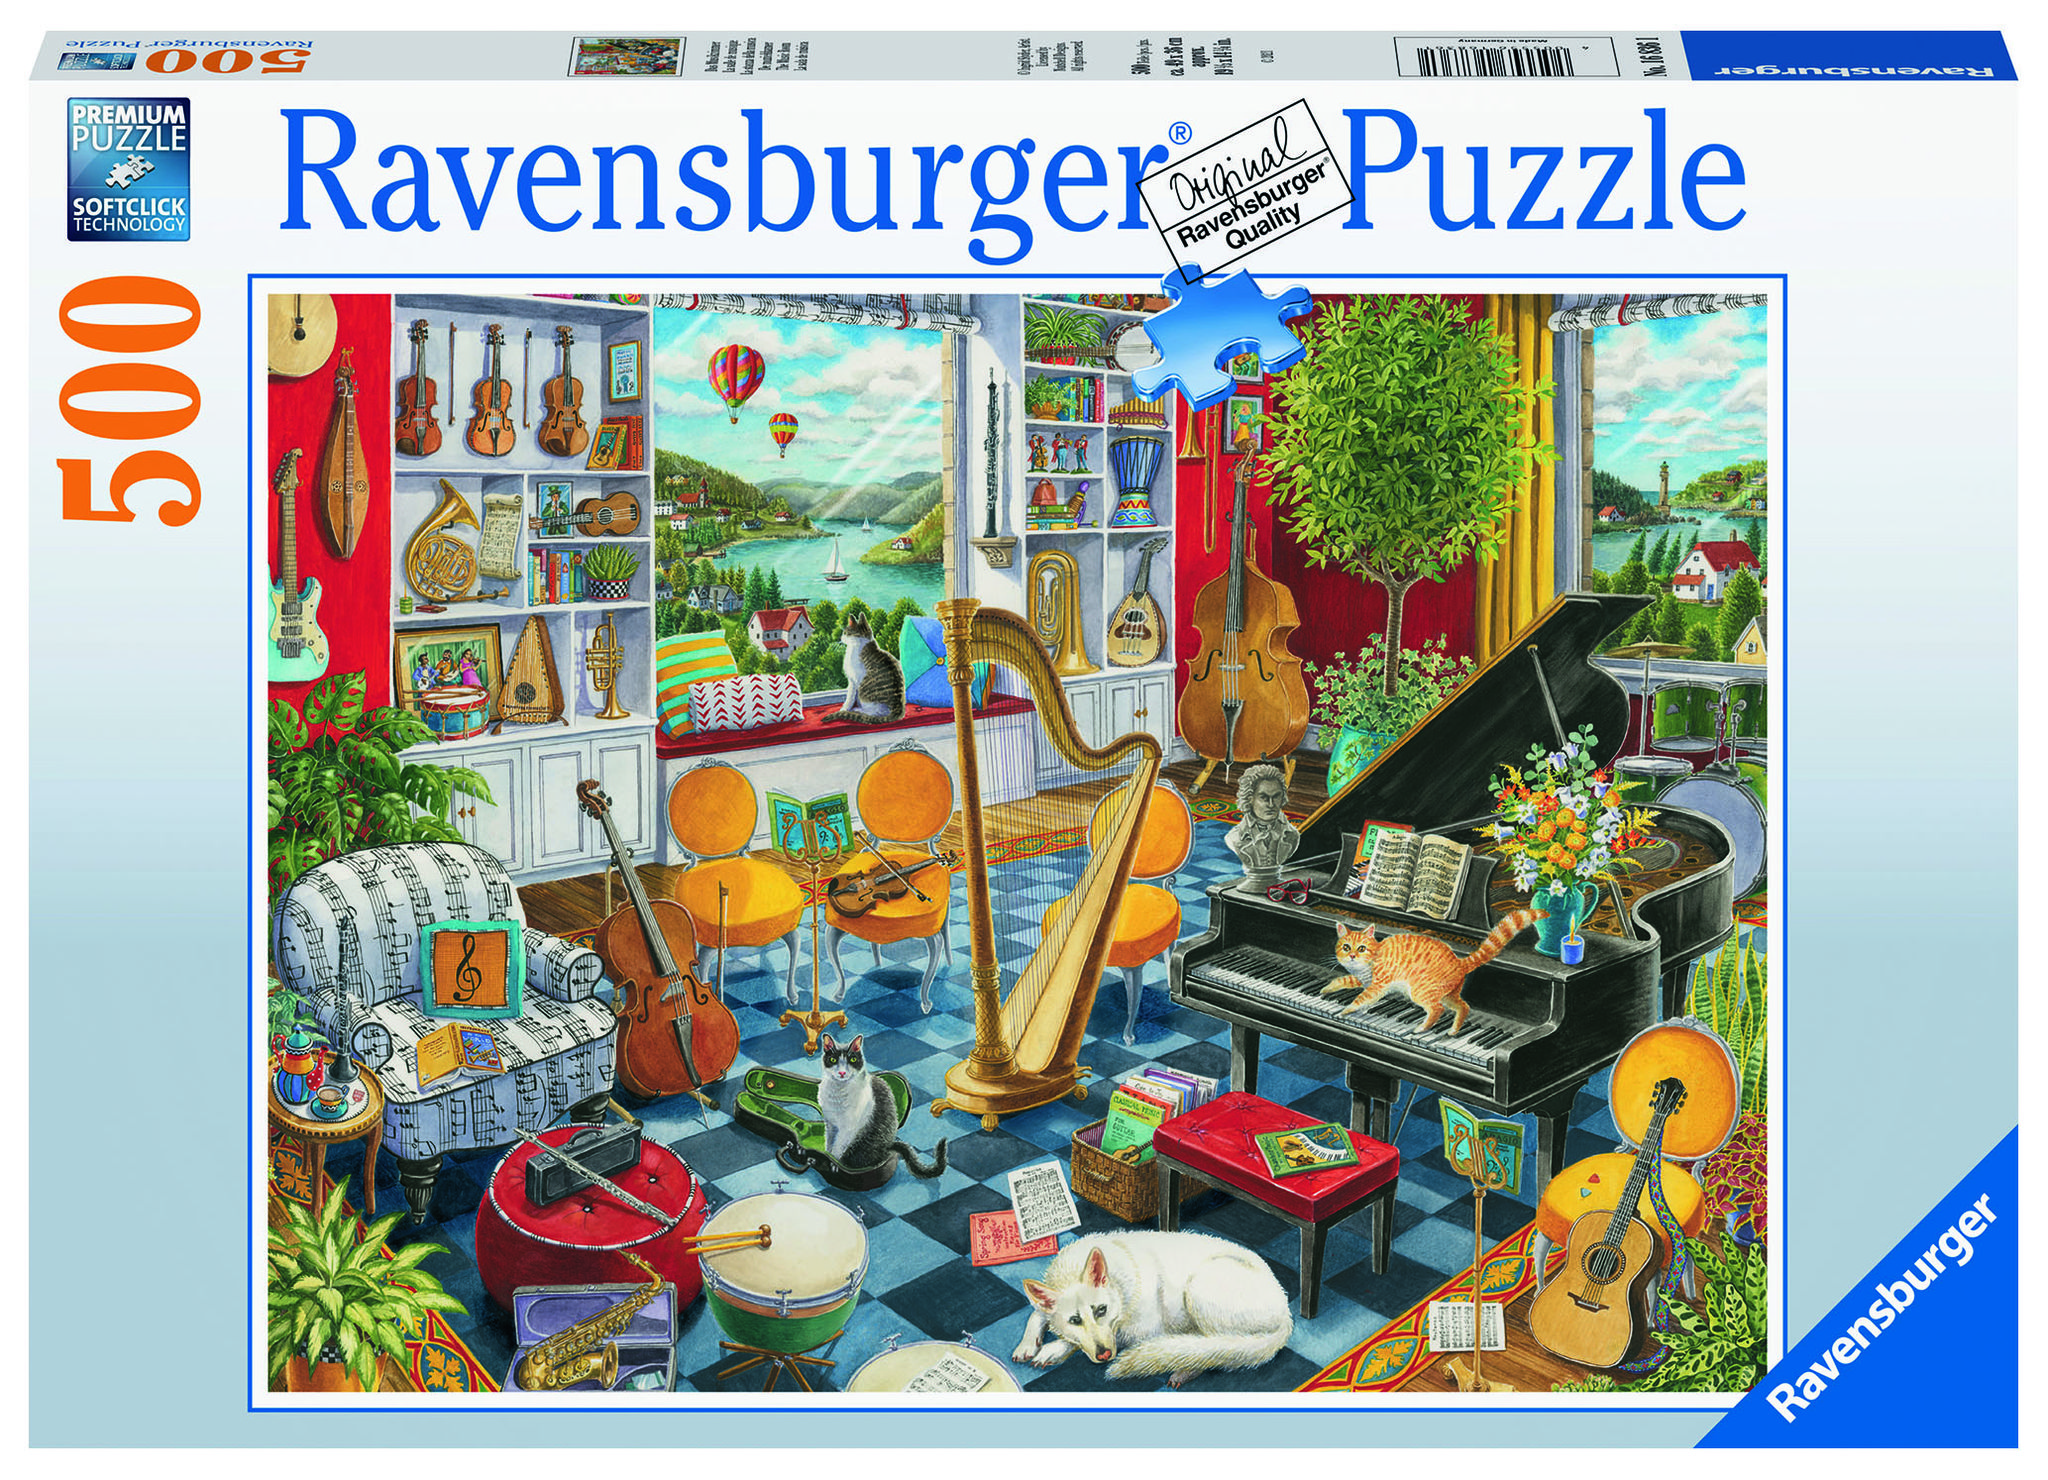 geweten hoofd sessie The Music Room Ravensburger 500 pc Puzzle – Purple Cow Toys